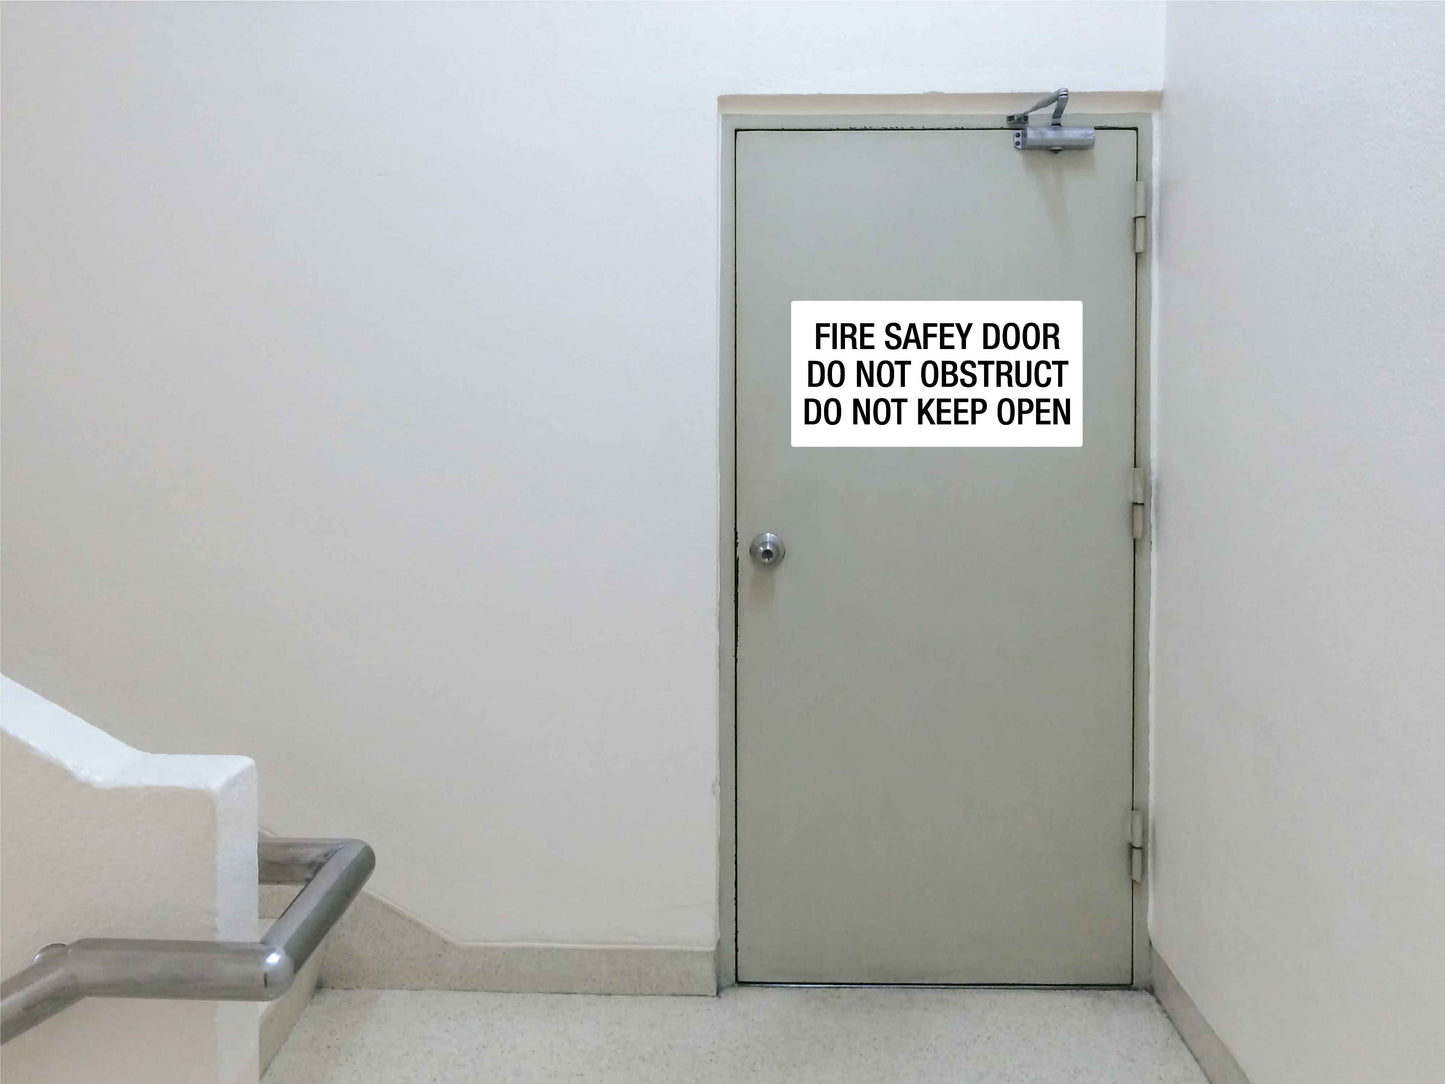 Restroom - Statutory Sign